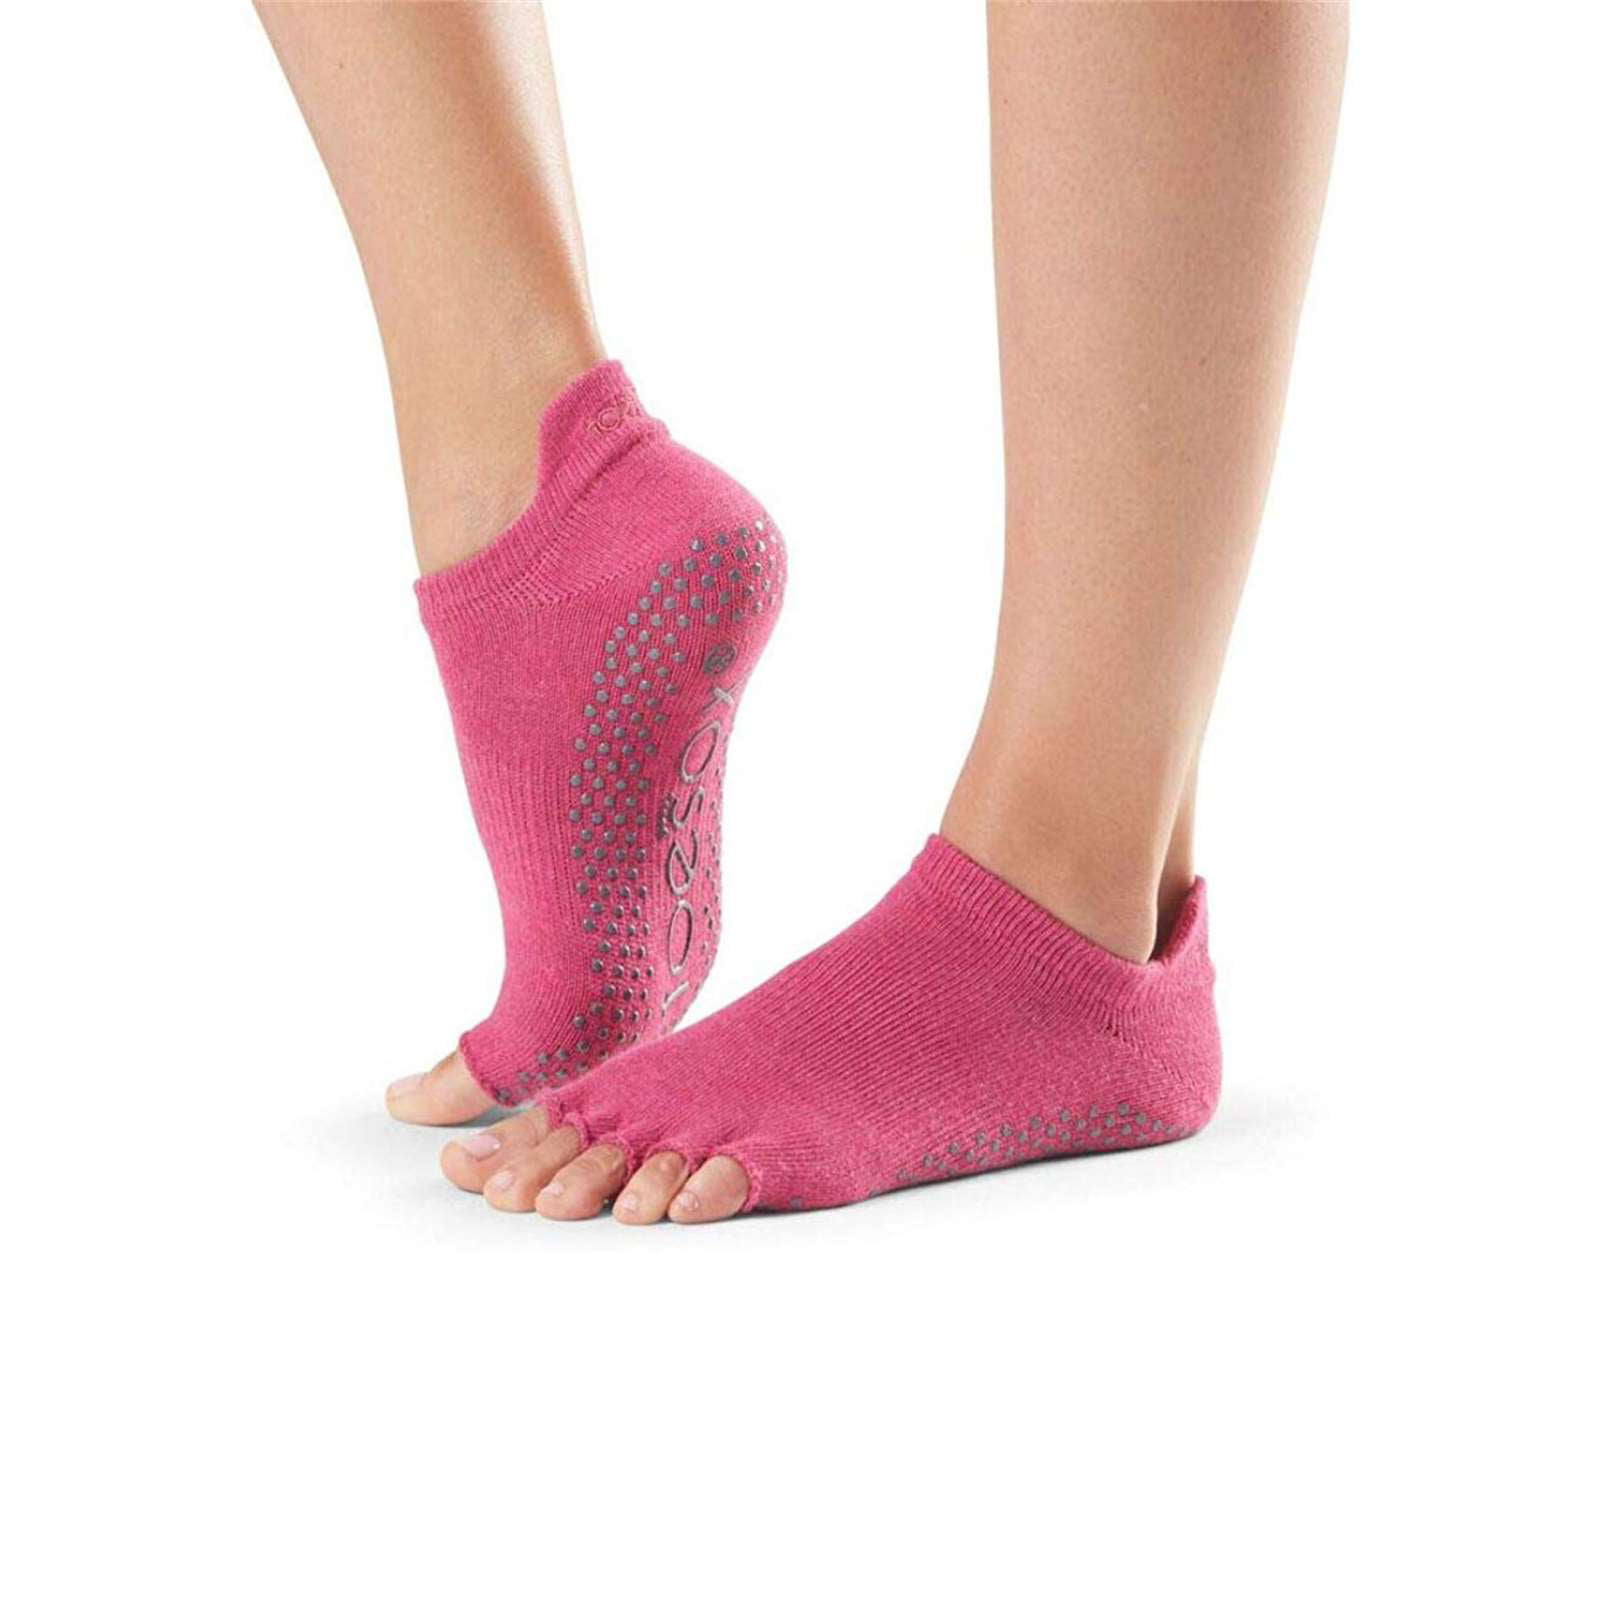 New TOESOX Women's Men's ANKLE Half Toe Grip Socks RED WHITE STRIPE Small 